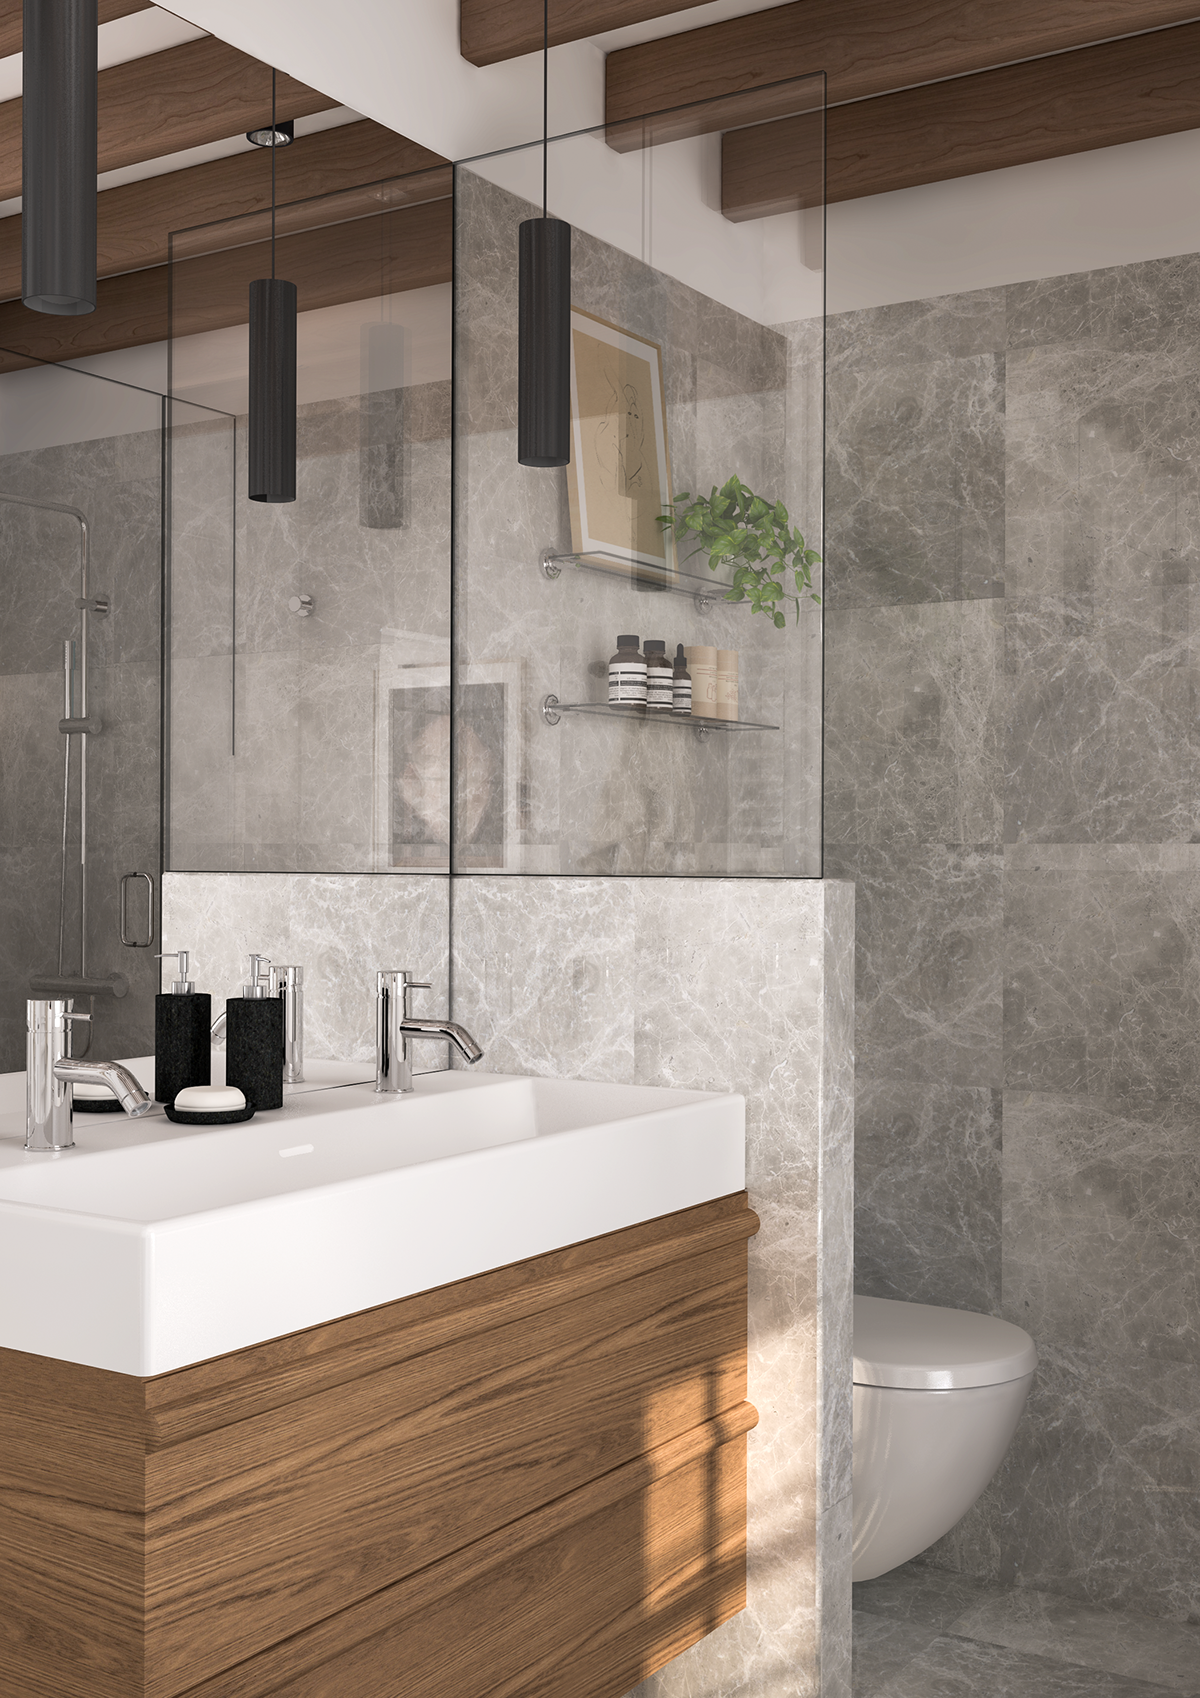 Marble and wood bathroom design on Behance